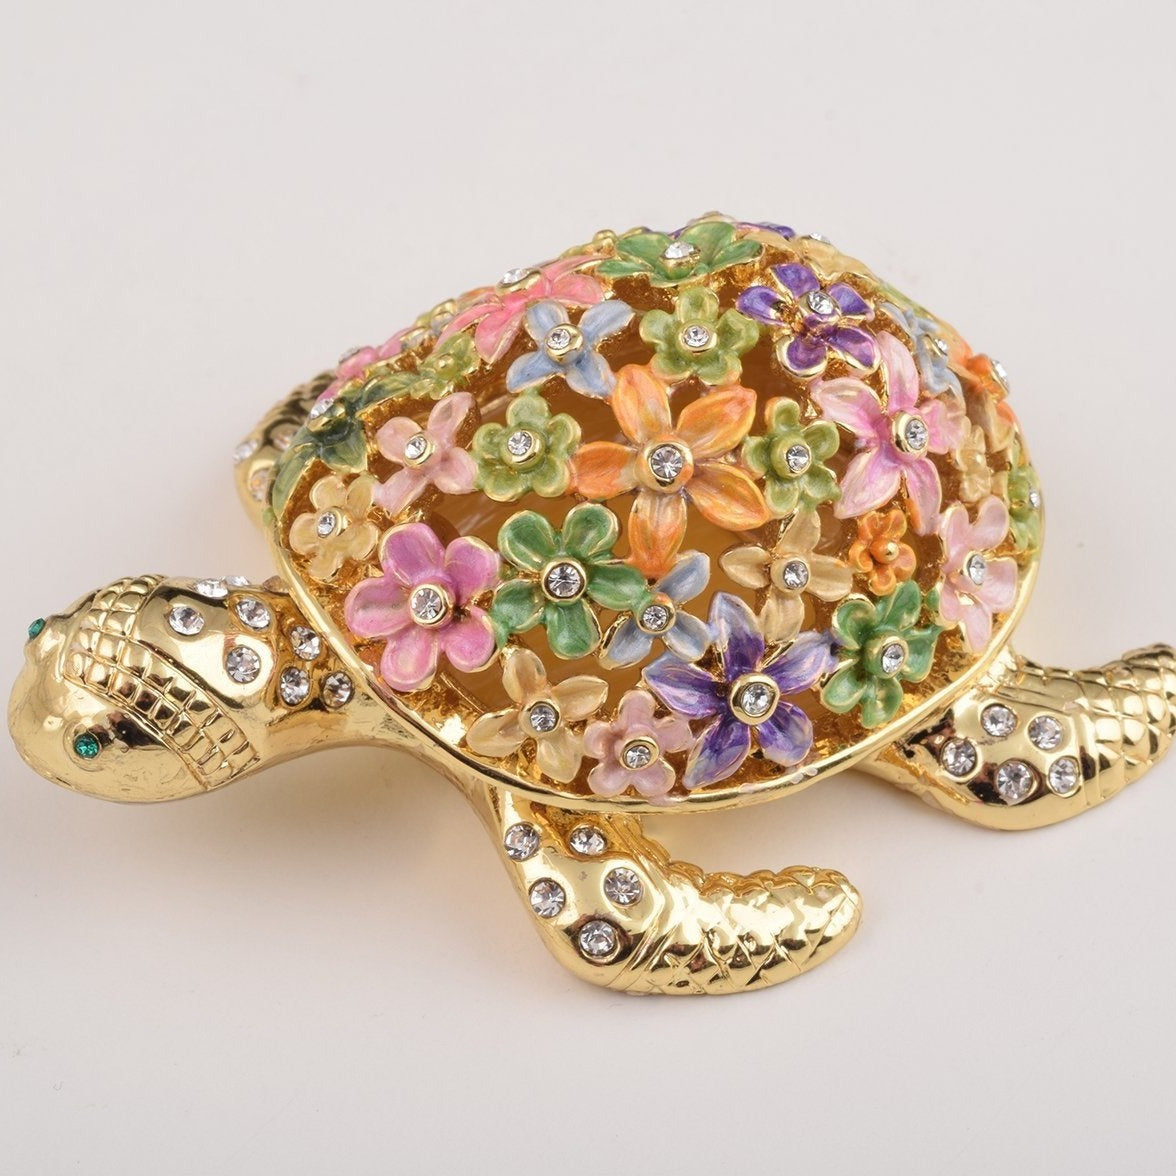 Keren Kopal Gold Turtle with Colorful Flowers Trinket Box  76.50